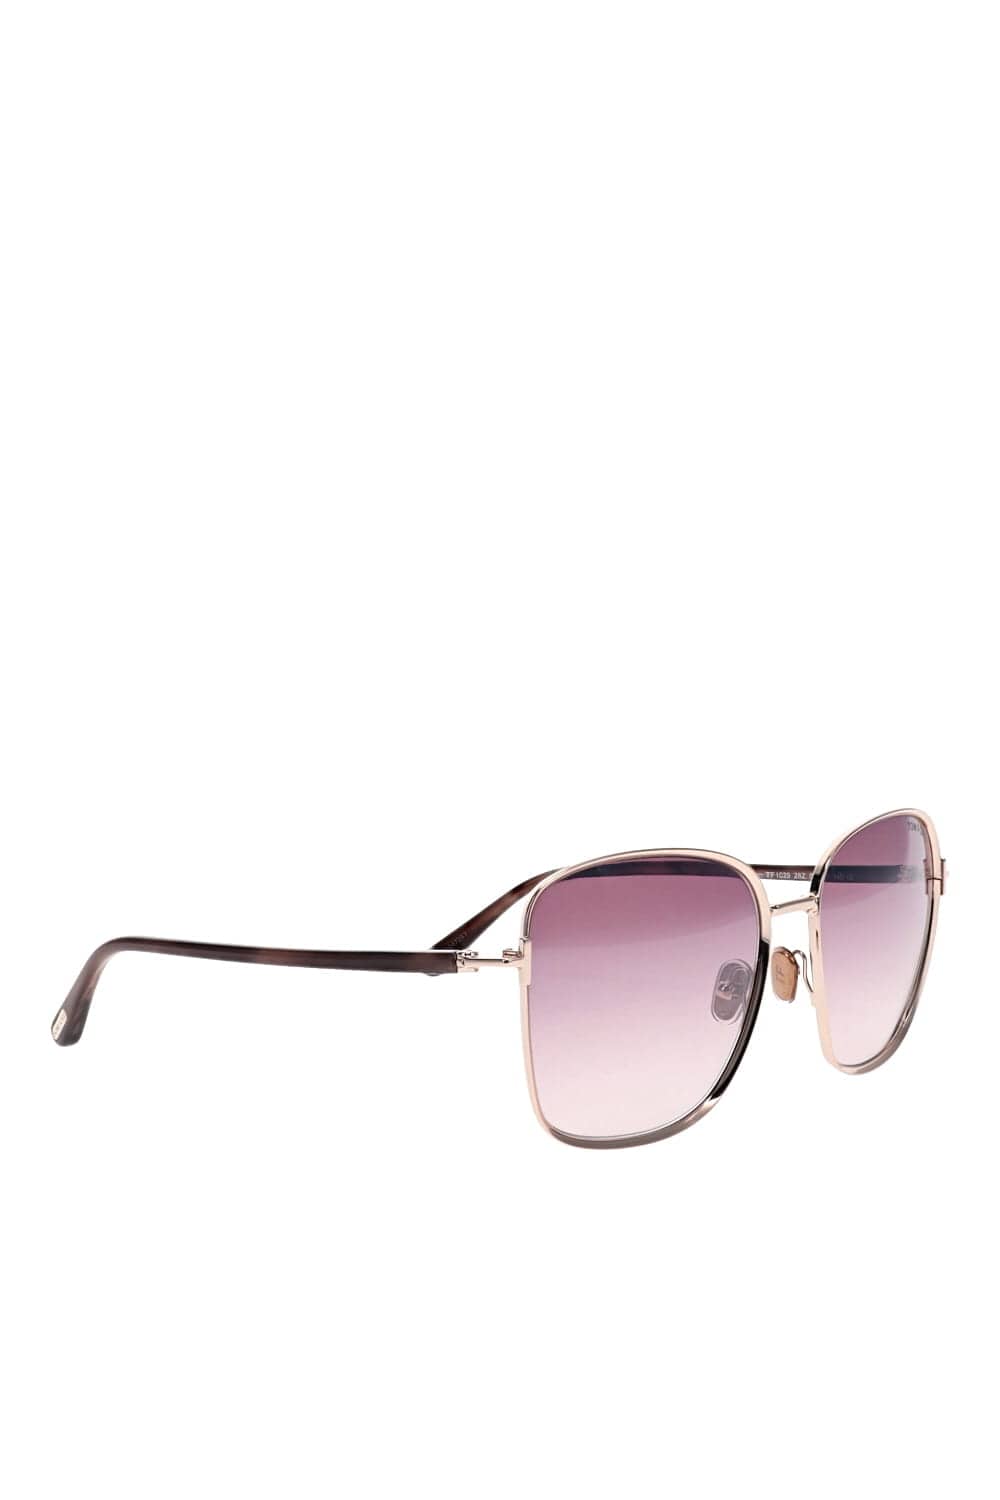 Tom Ford Eyewear FT1029 Shiny Rose Havana Sunglasses FT1029 Rose Havana